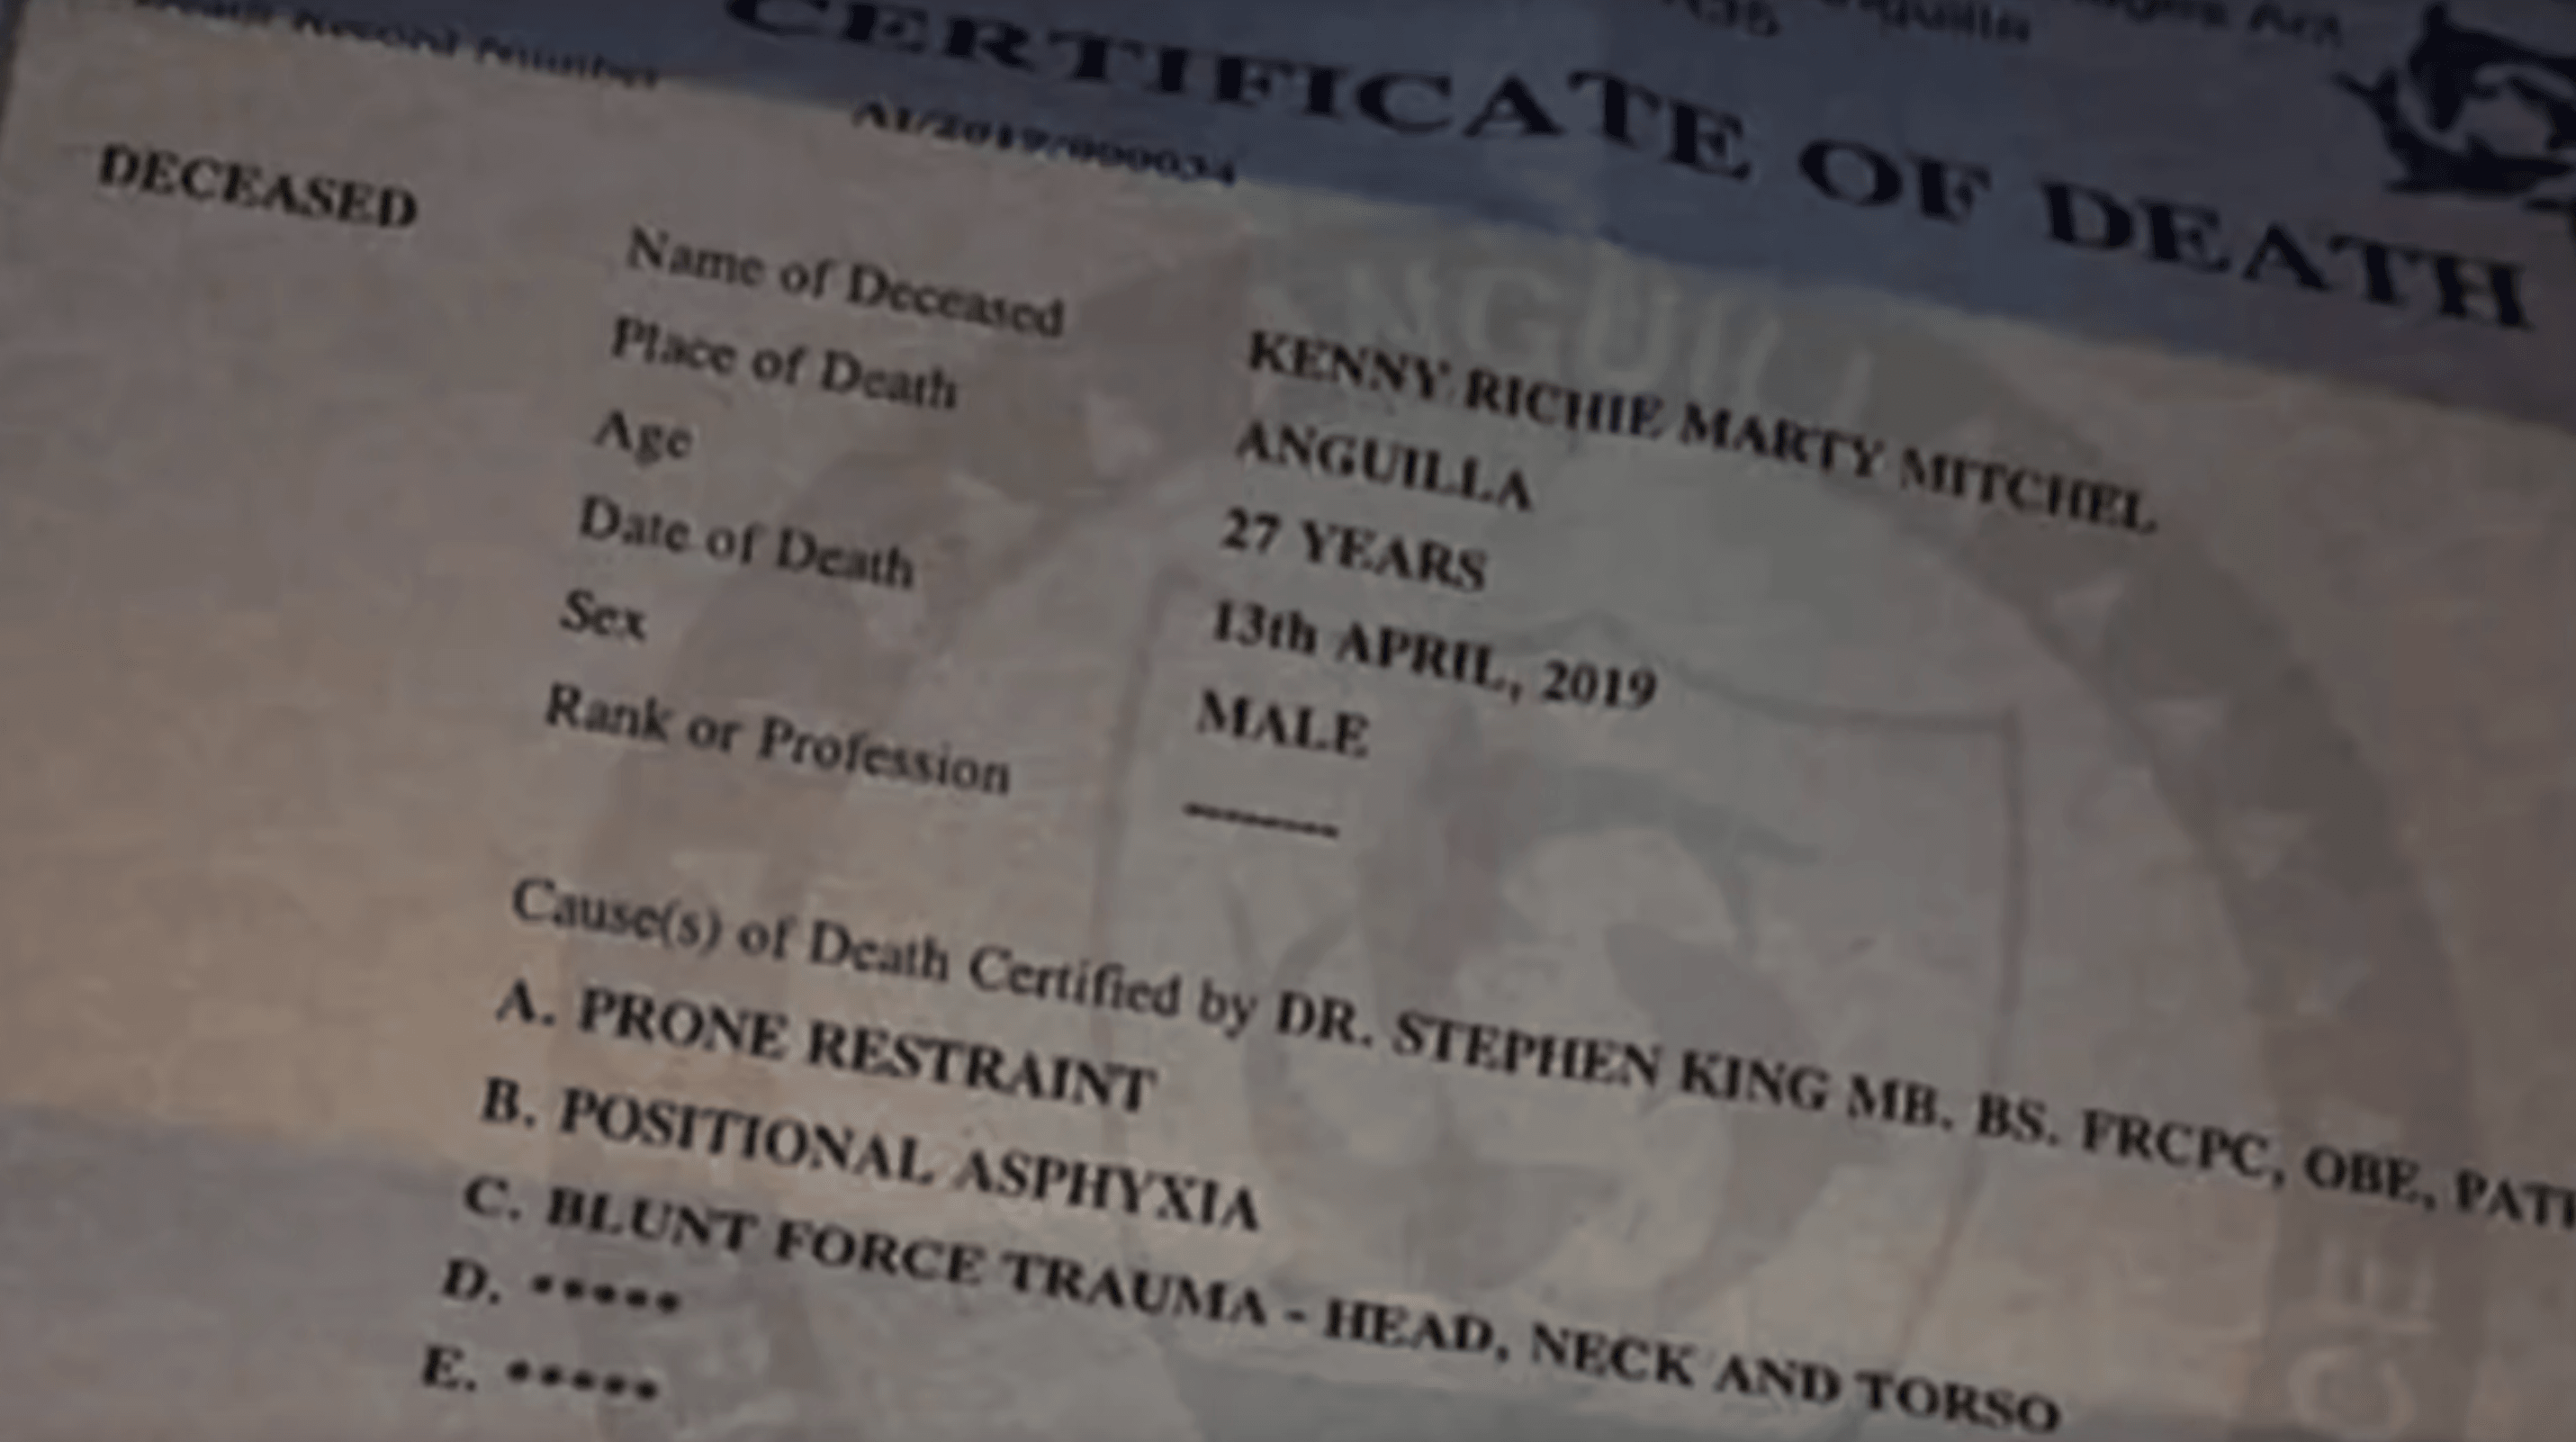 Kenny Richie Marty Mitchel Death Certificate, Anguilla